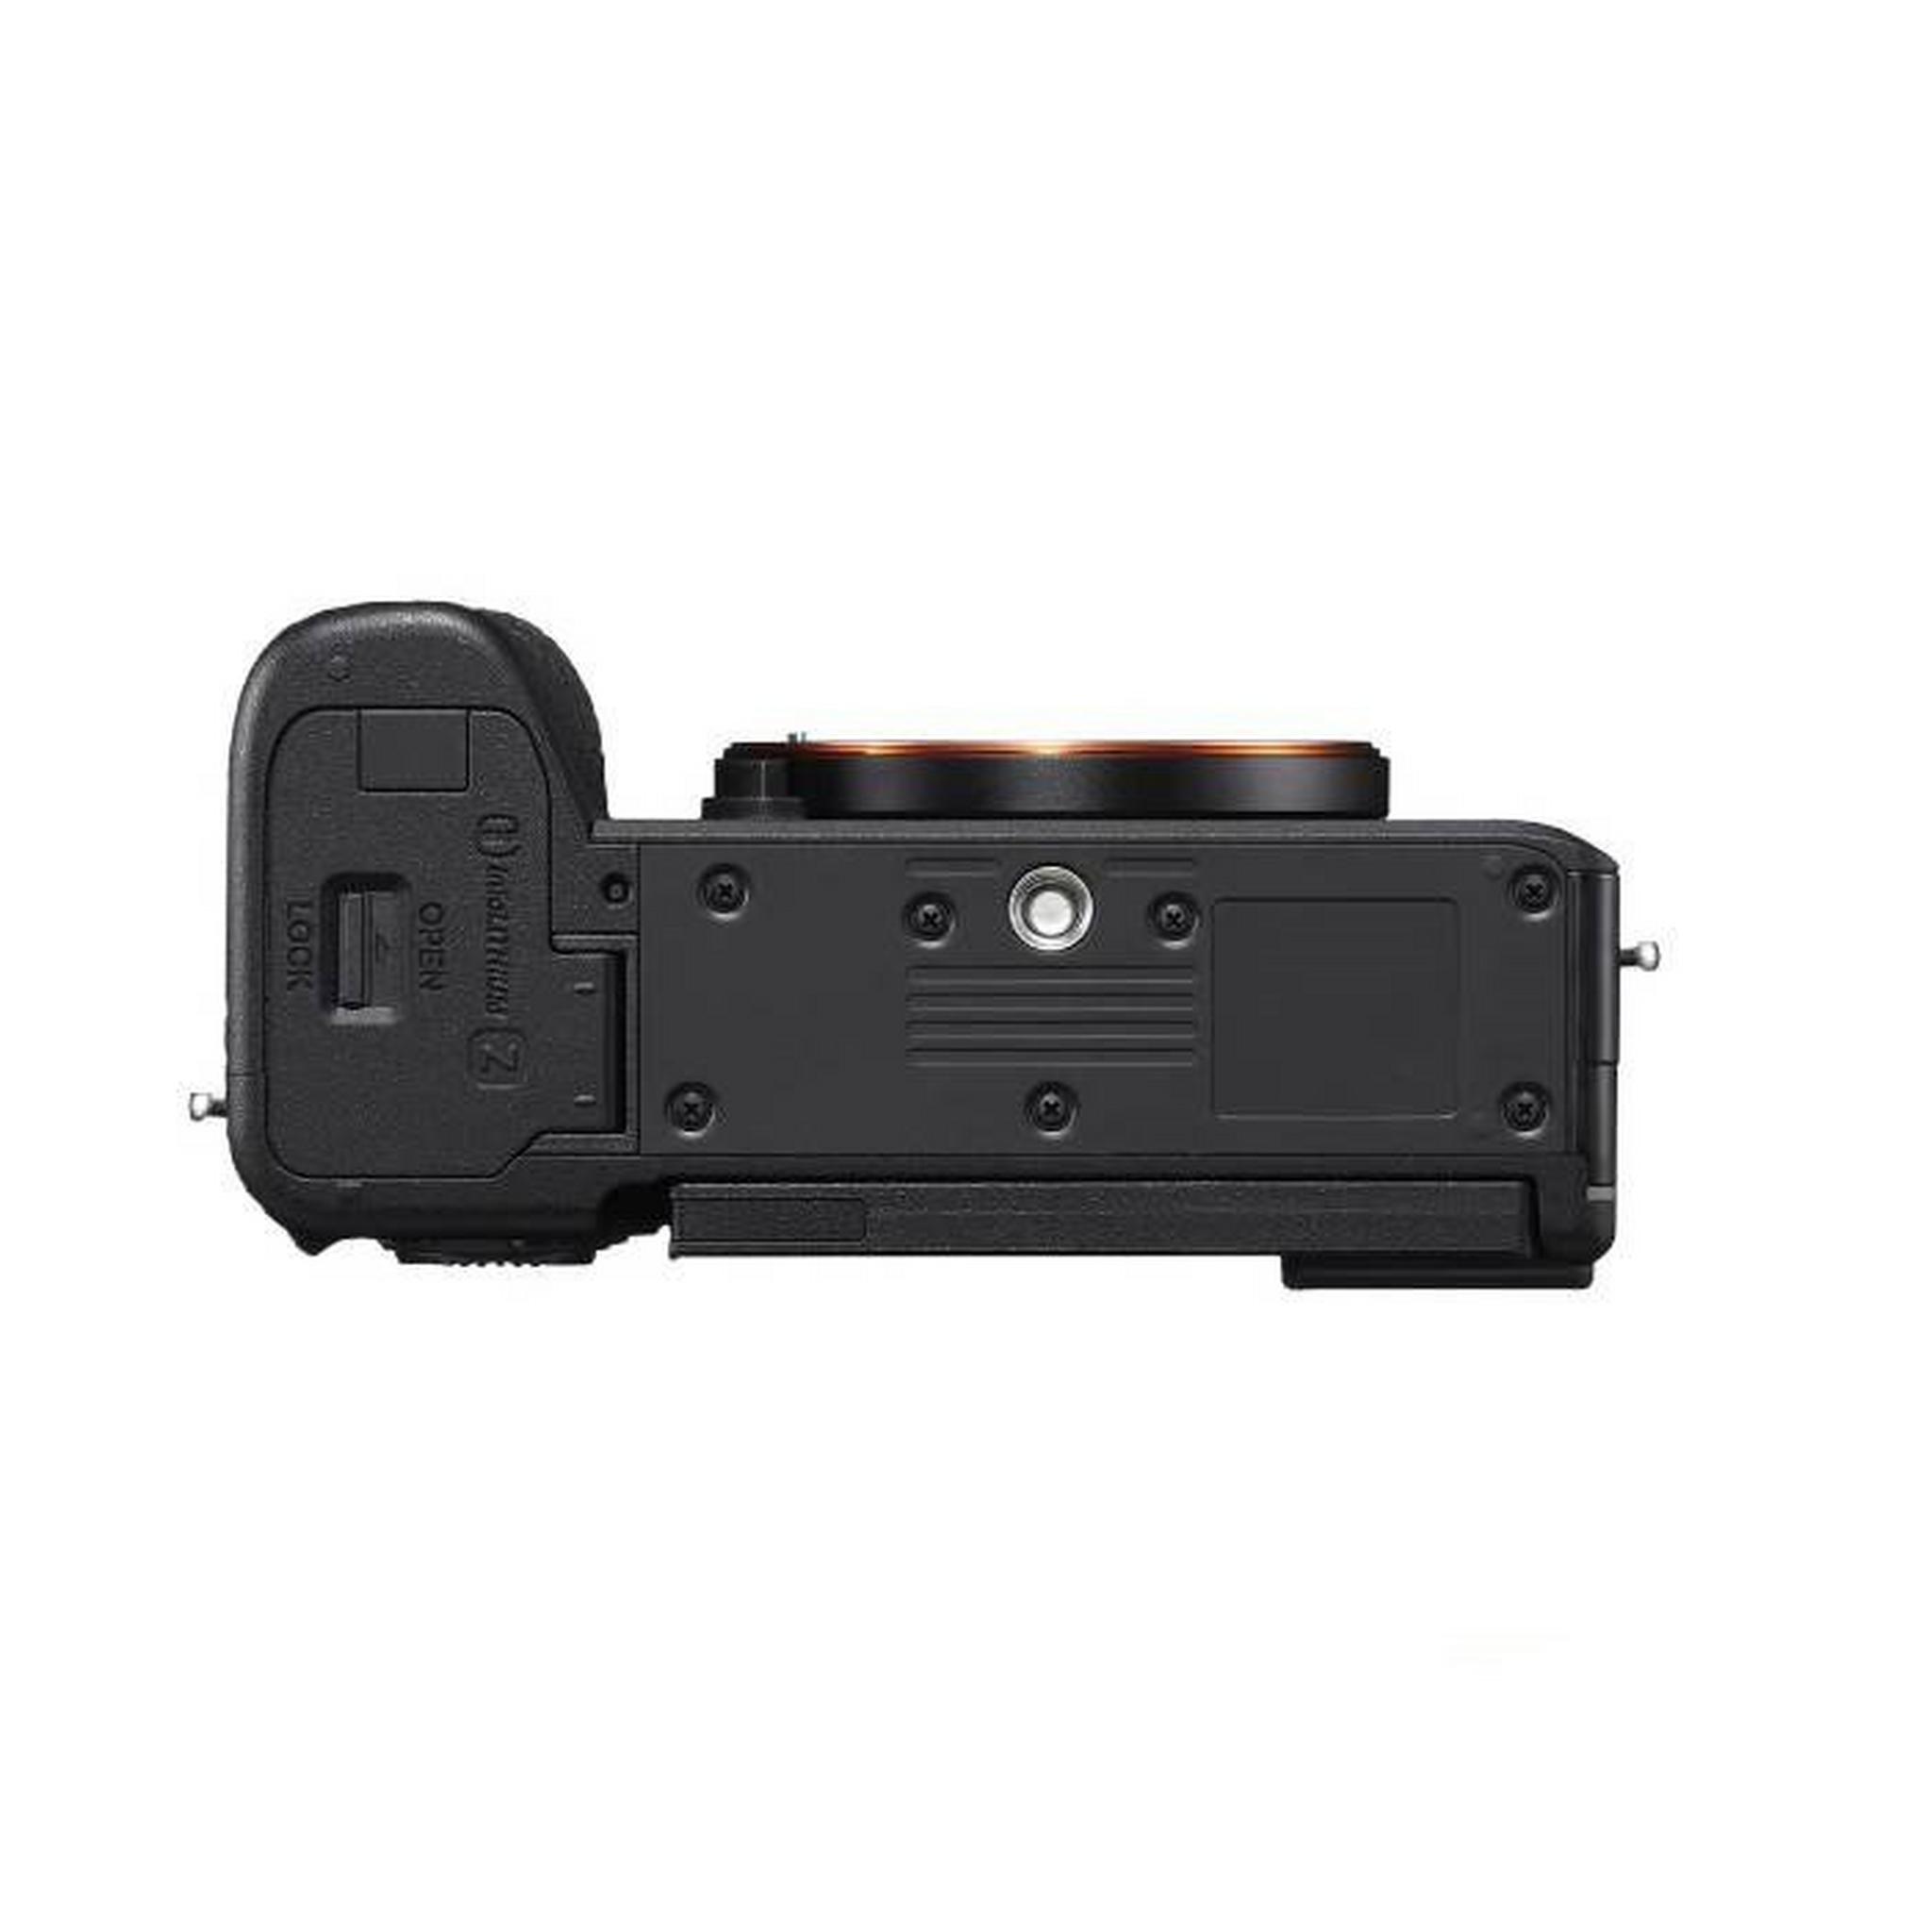 Sony Alpha 7C II Mirrorless Camera (Body Only) – Black